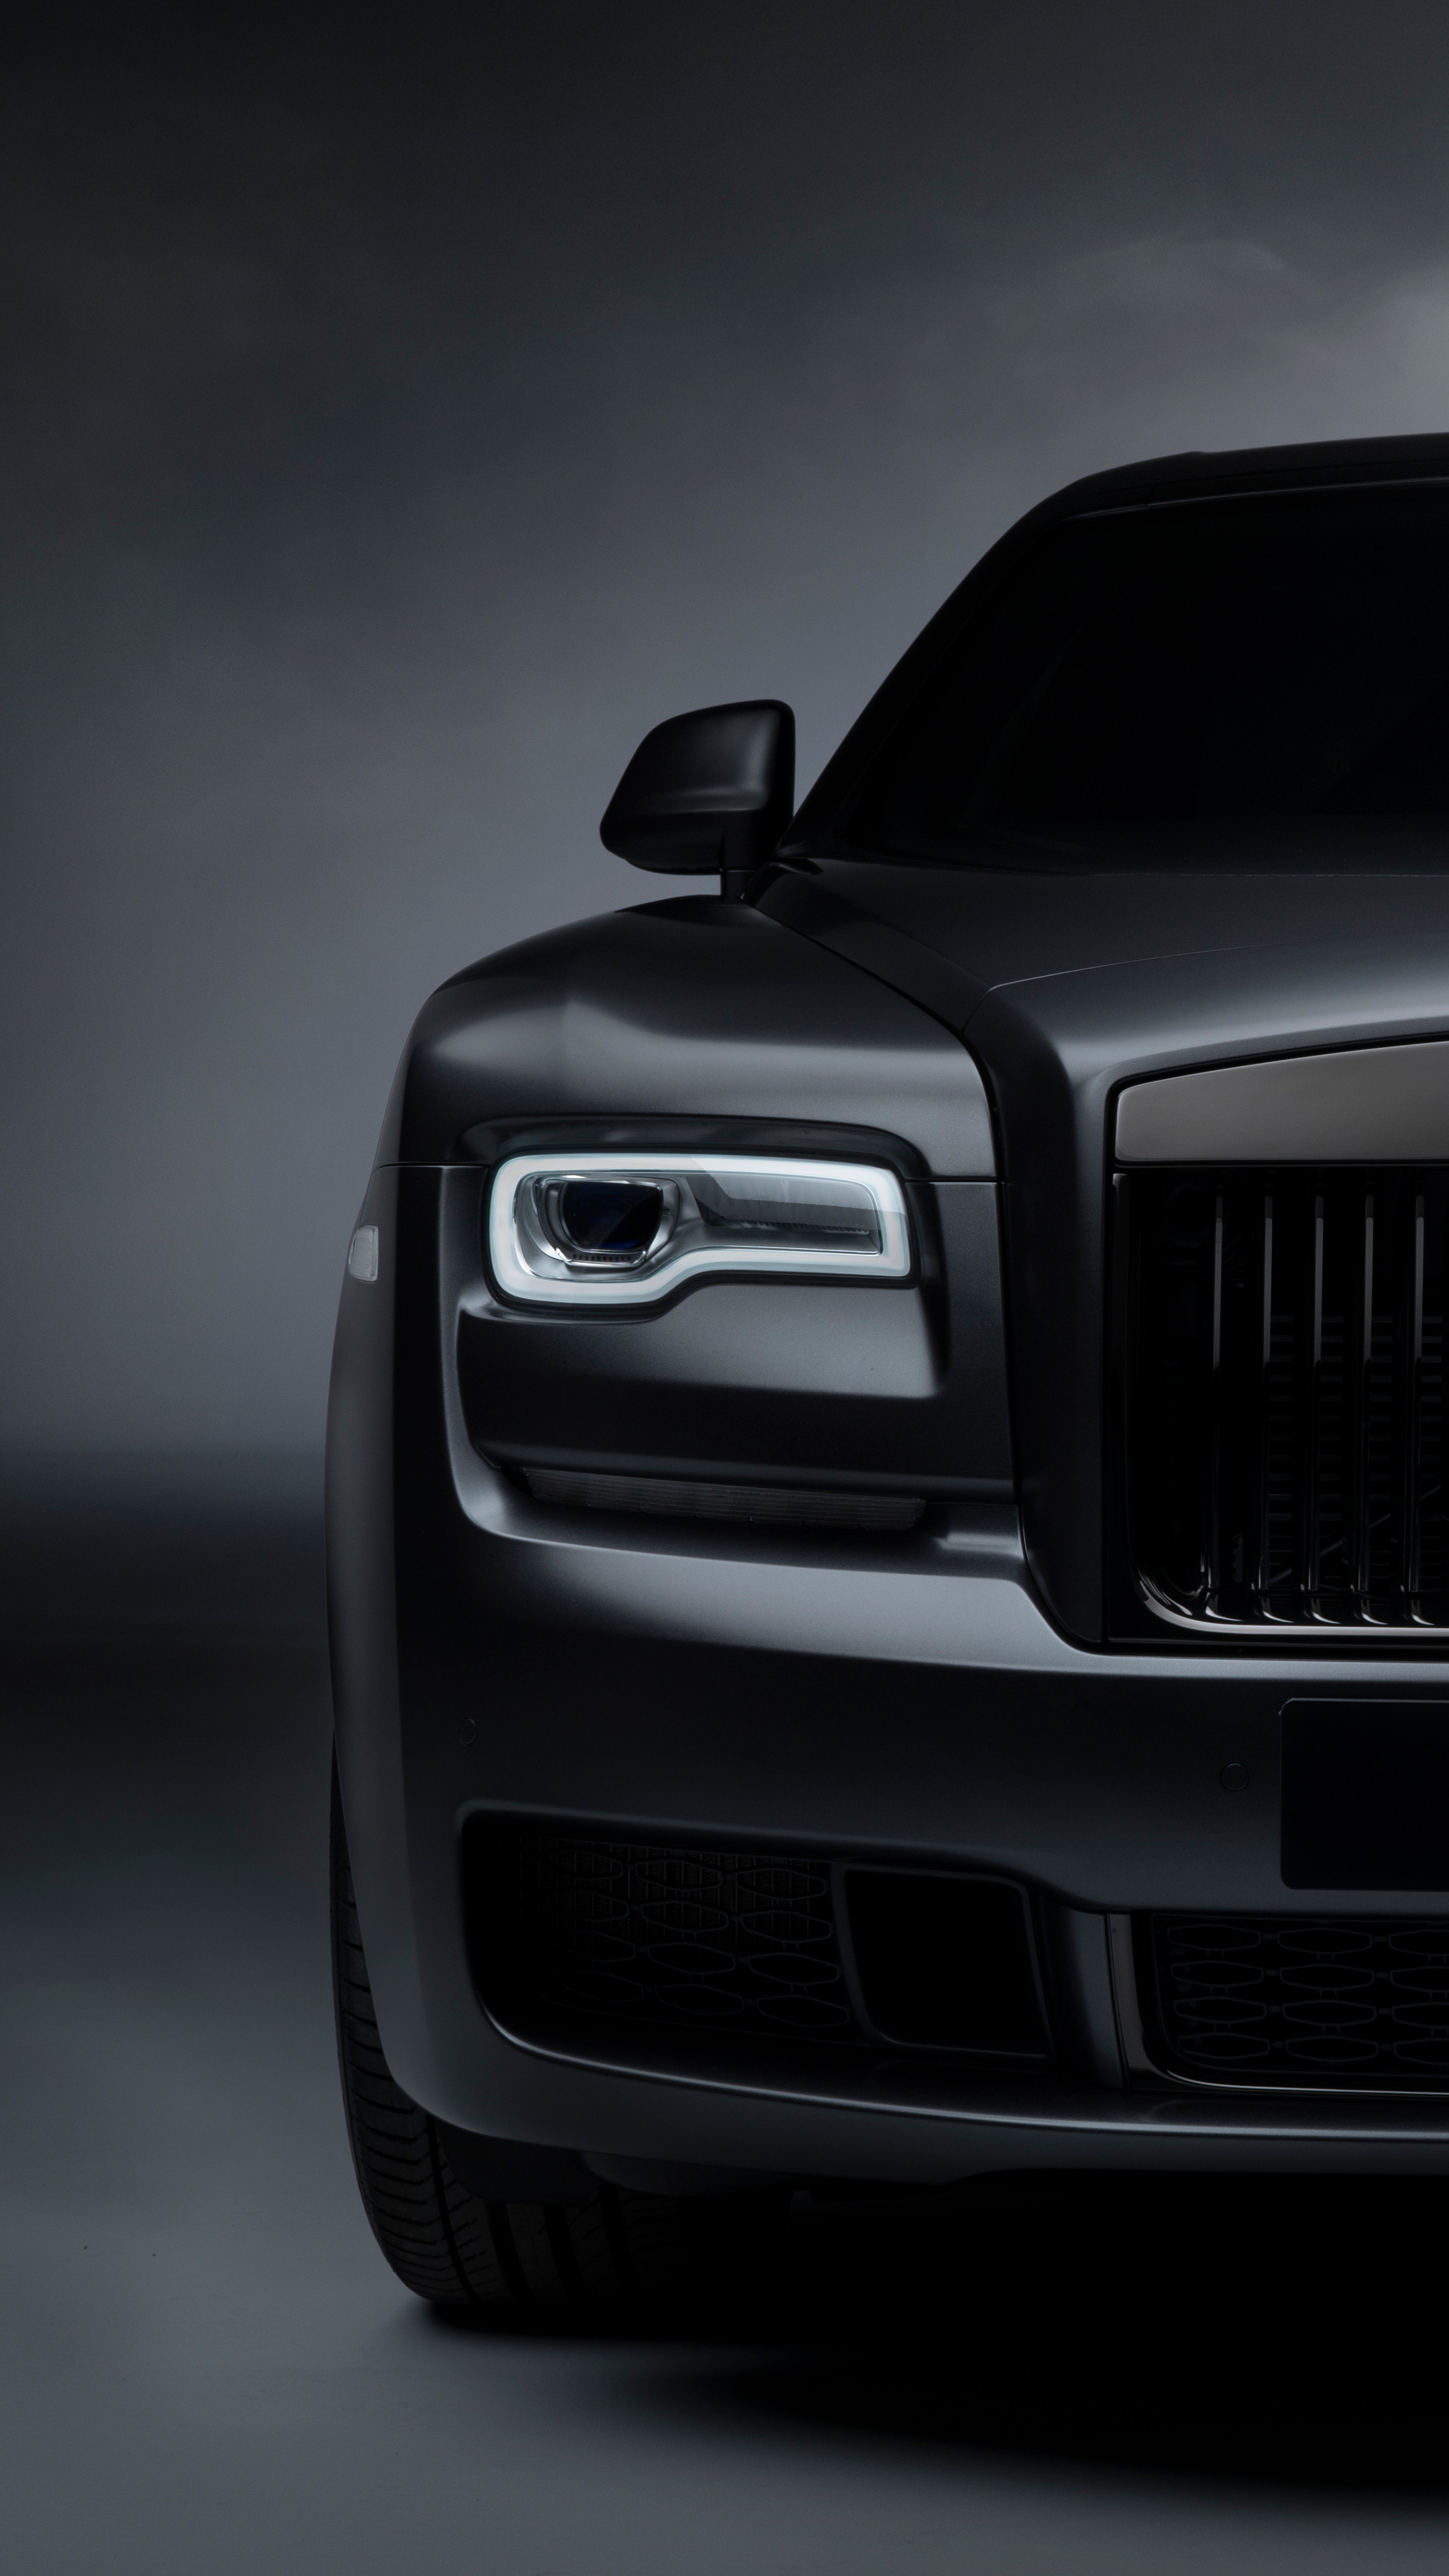 Rolls-Royce Ghost, Stylish black badge, Sony Xperia display, Stunning visuals, 2160x3840 4K Phone